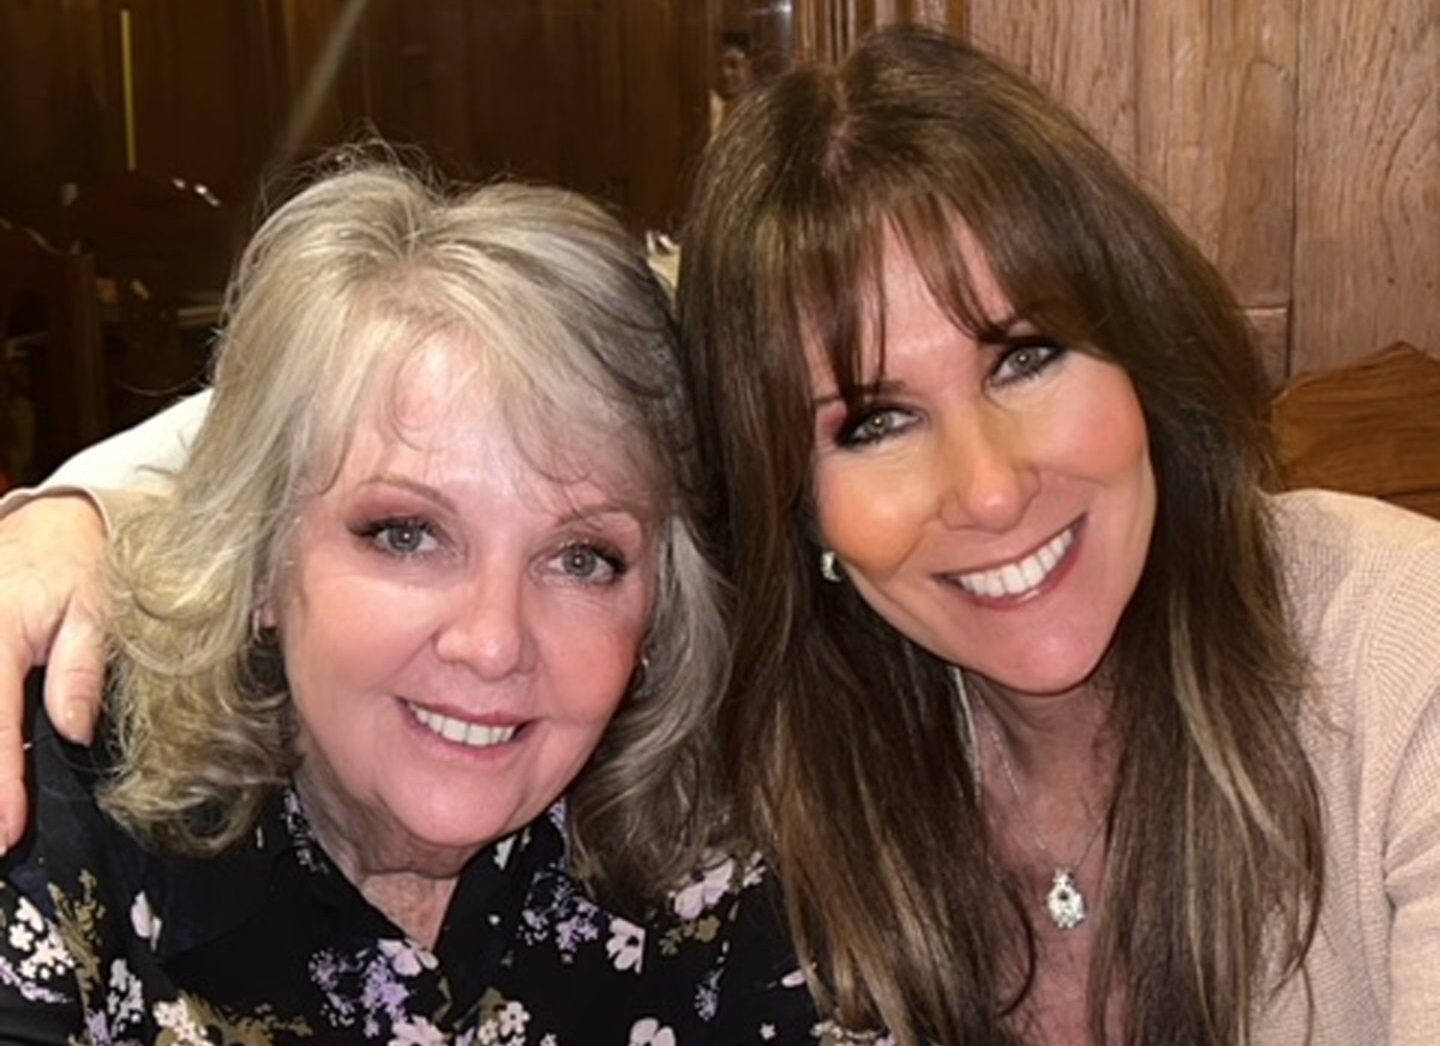 June with her friend Linda Lusardi.